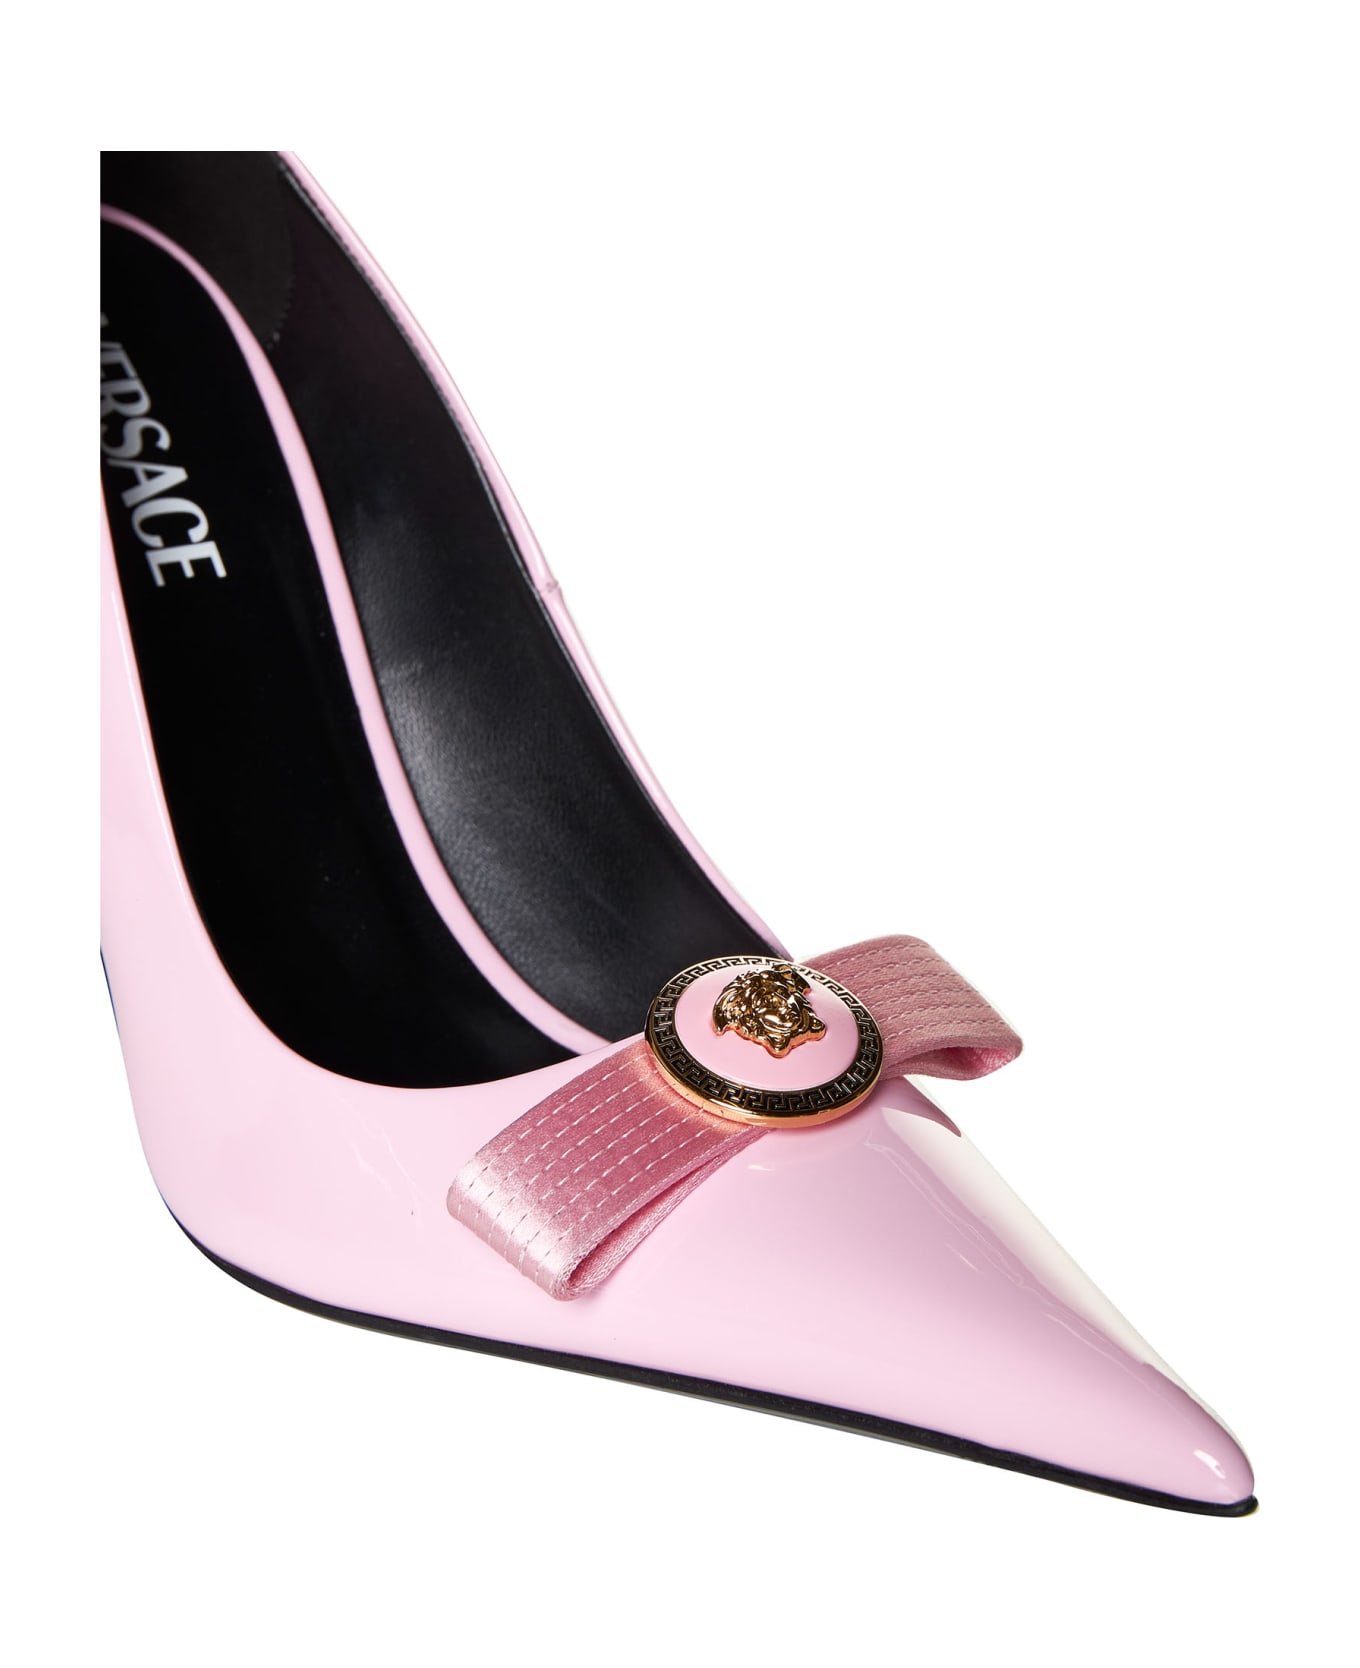 Versace High-heeled Shoe - Pale pink versace gold